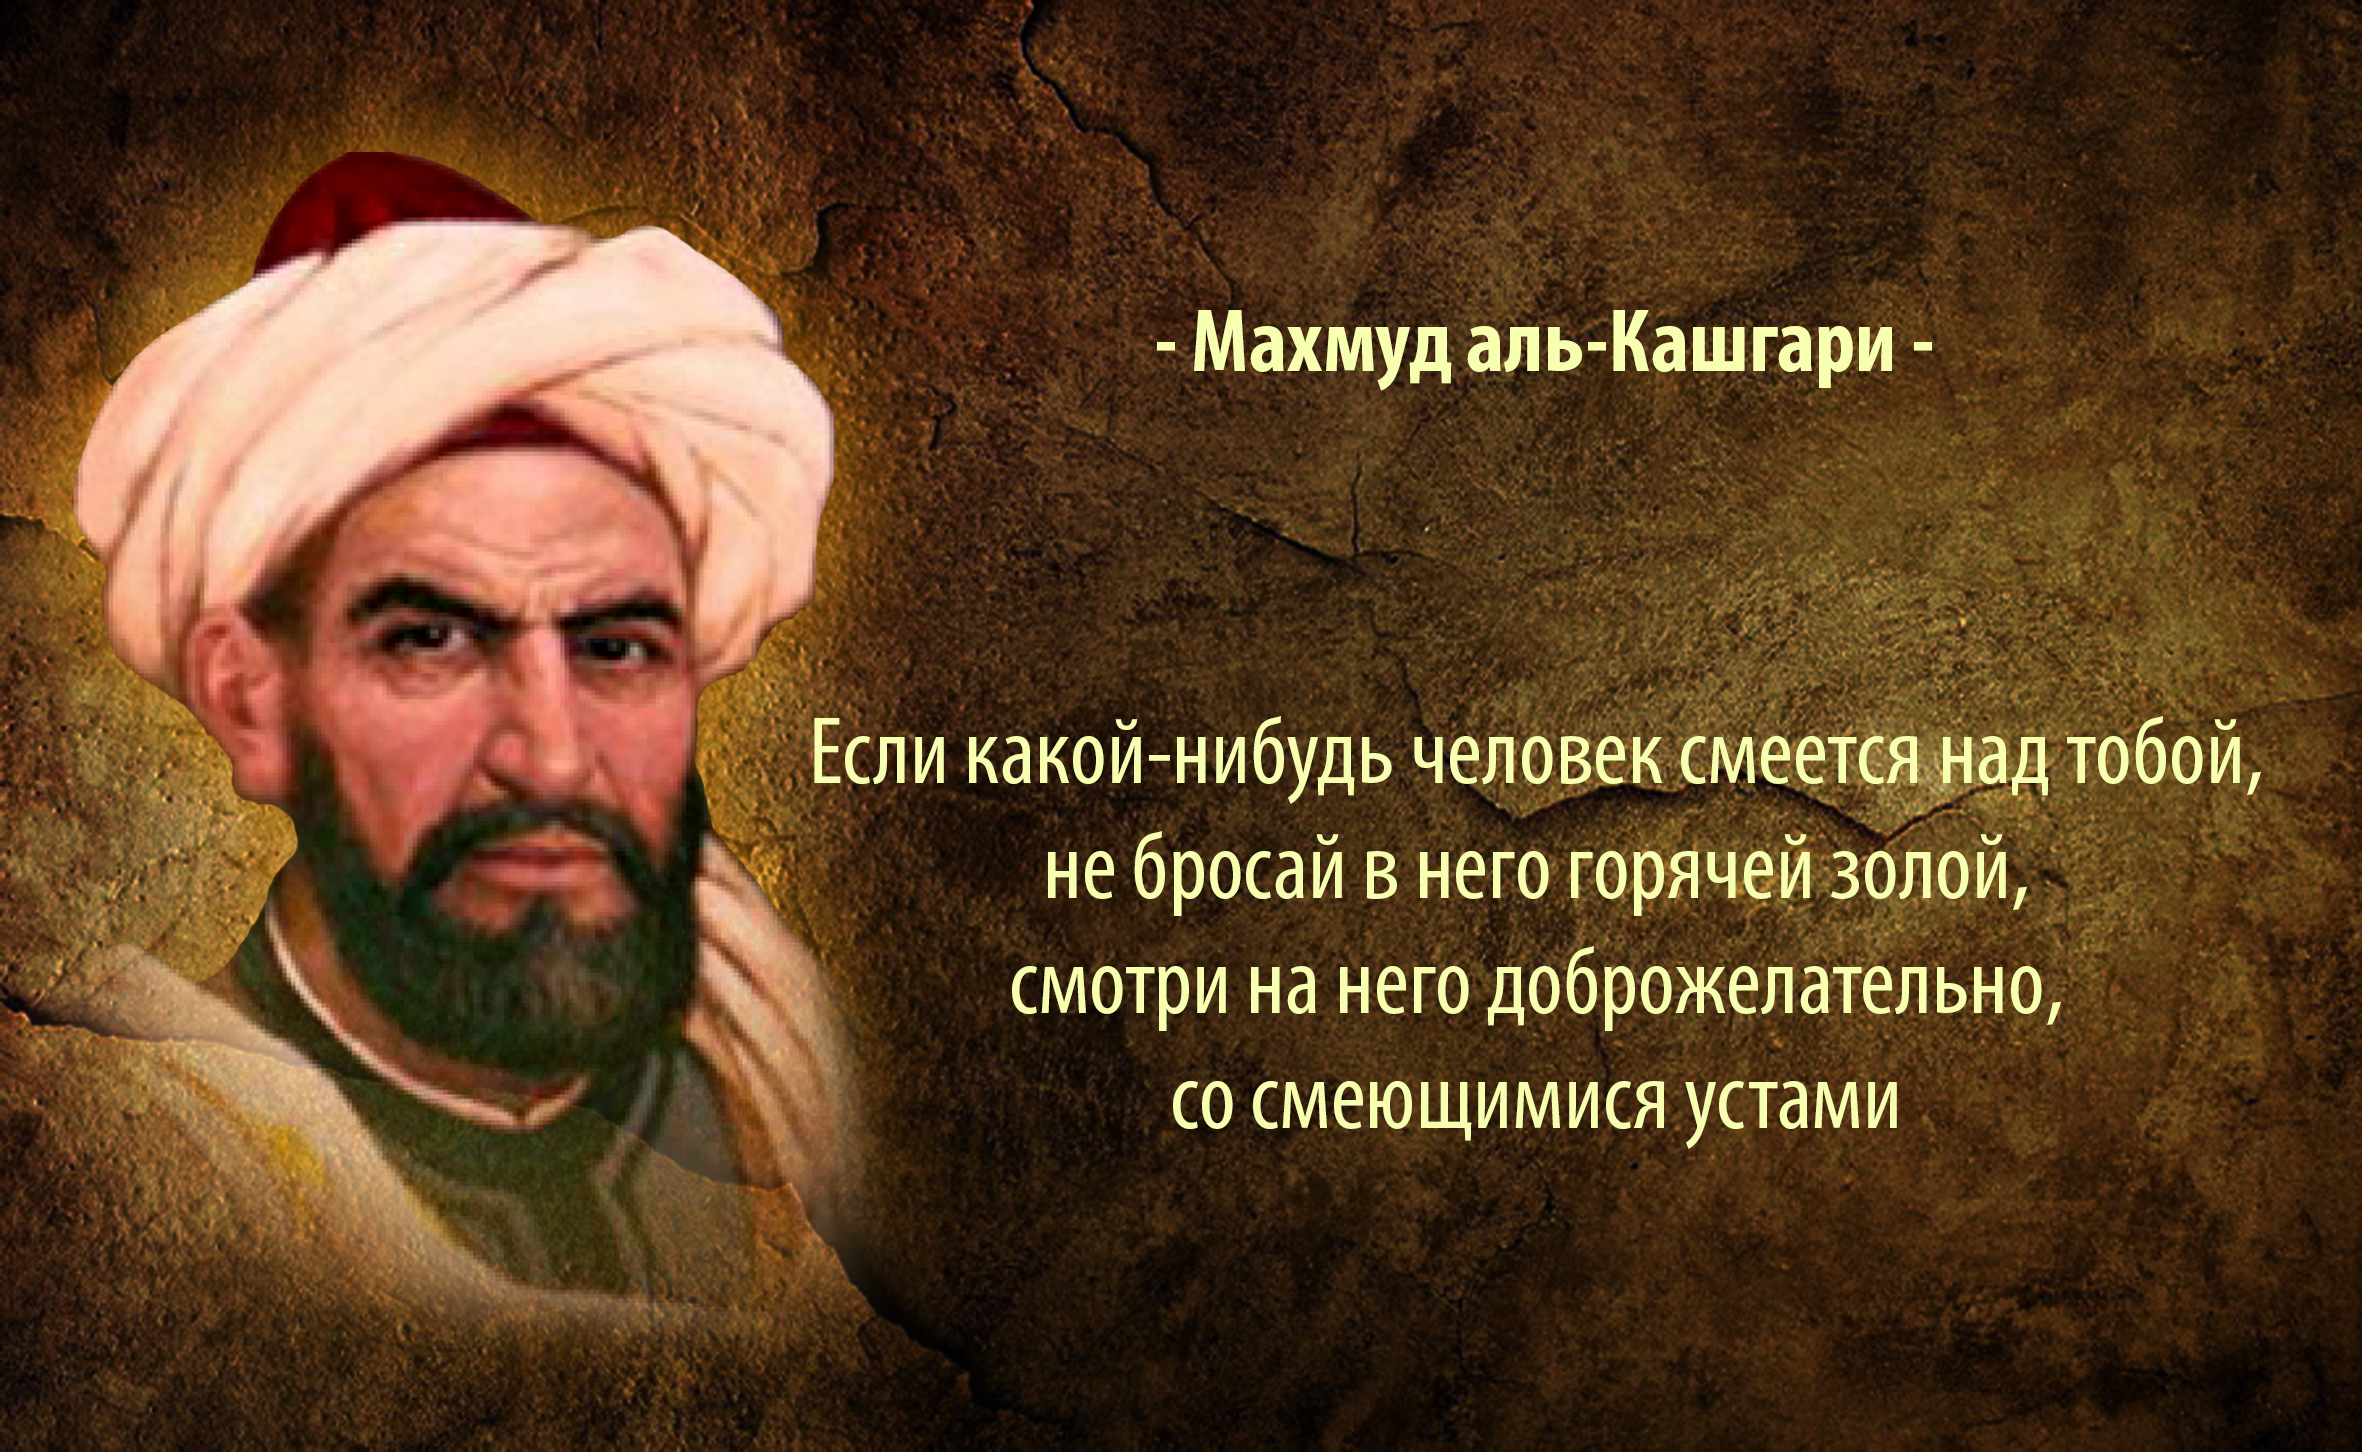 10 крылатых тюркских фраз от Махмуда Кашгари